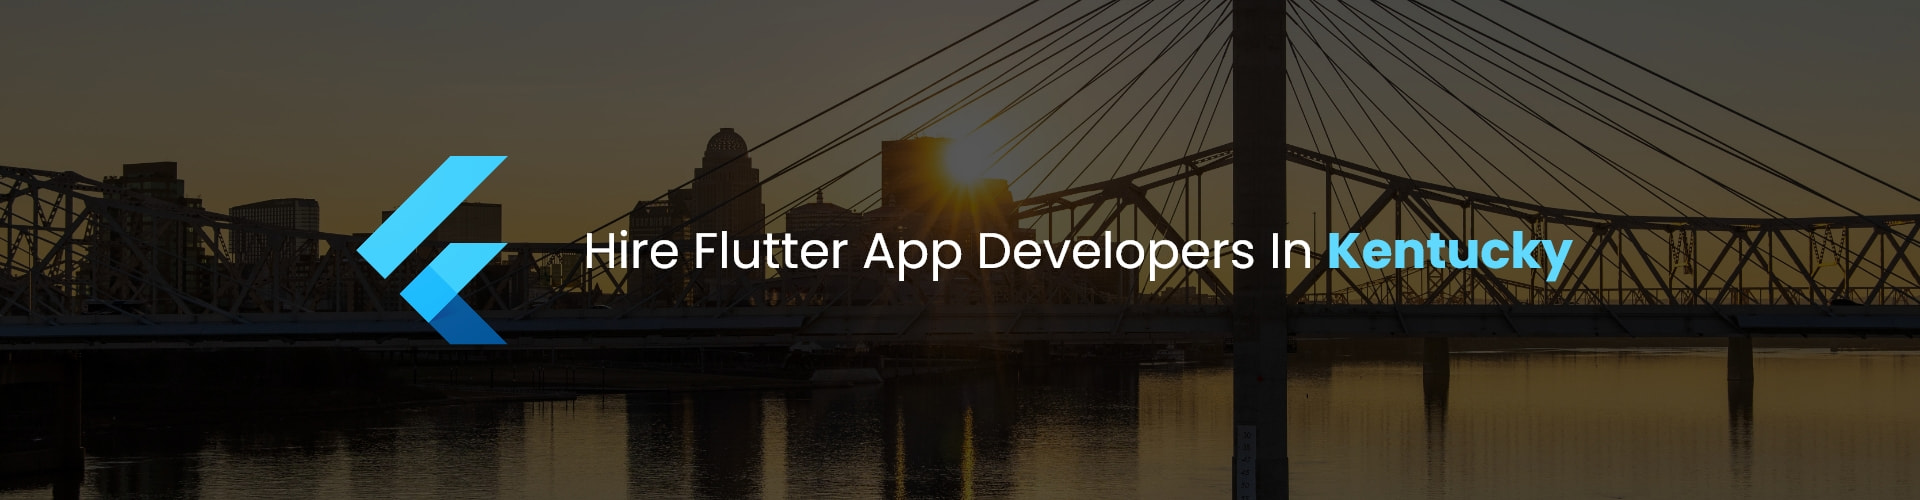 flutter app developers in kentucky